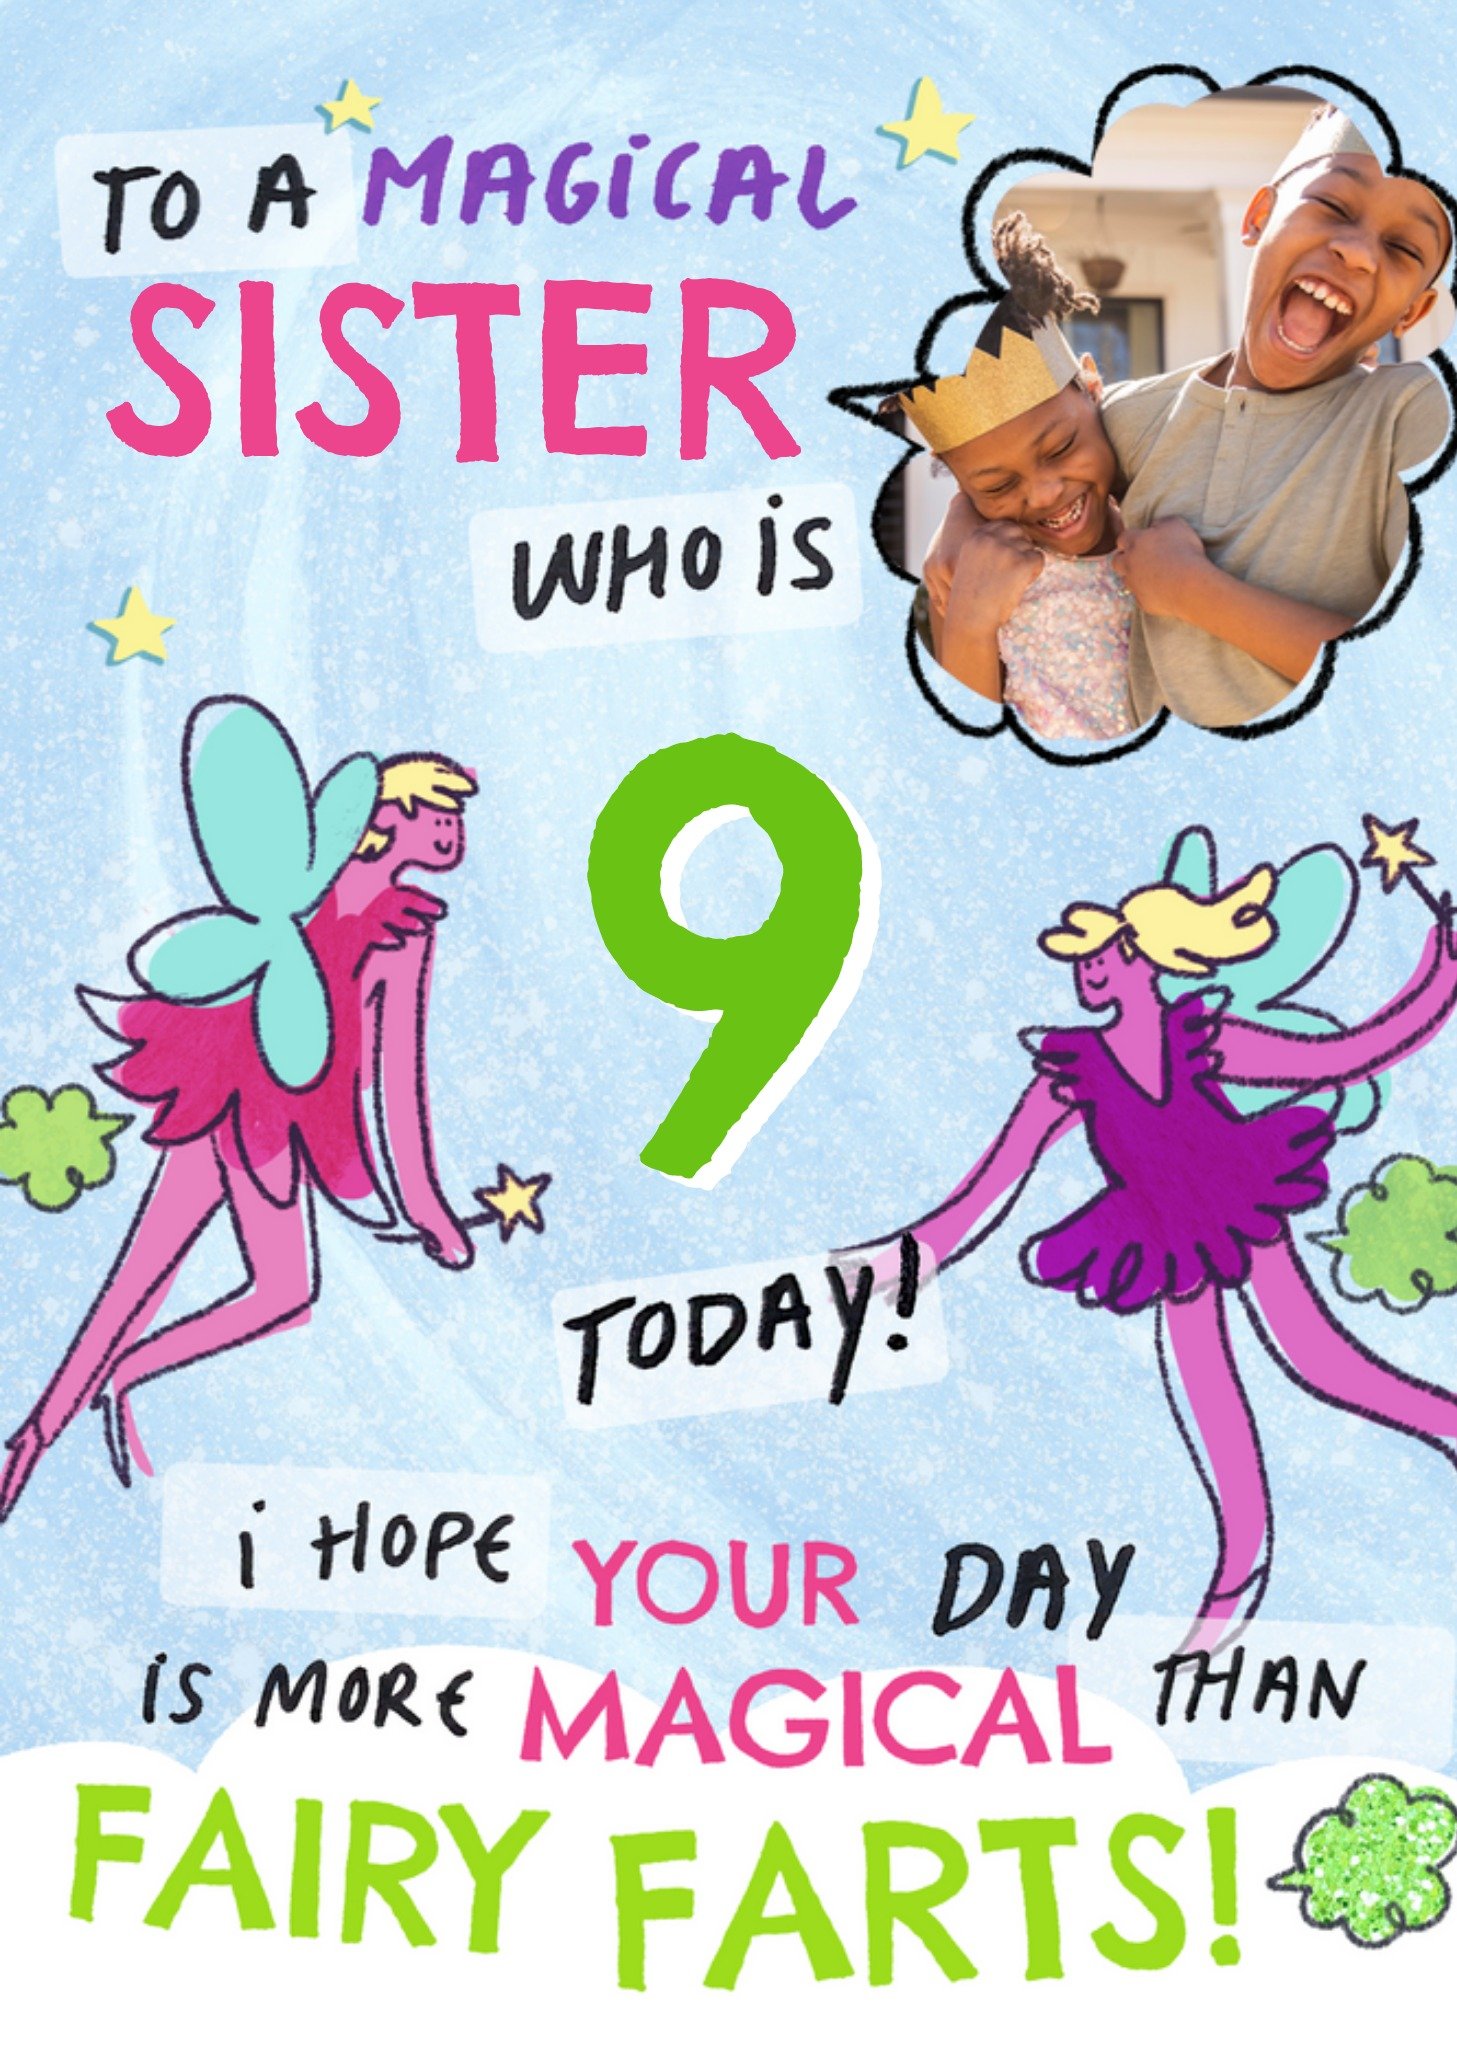 Moonpig Gross To A Magical Sister 9 Today Fairy Farts Illustrated Fairies Birthday Card Ecard